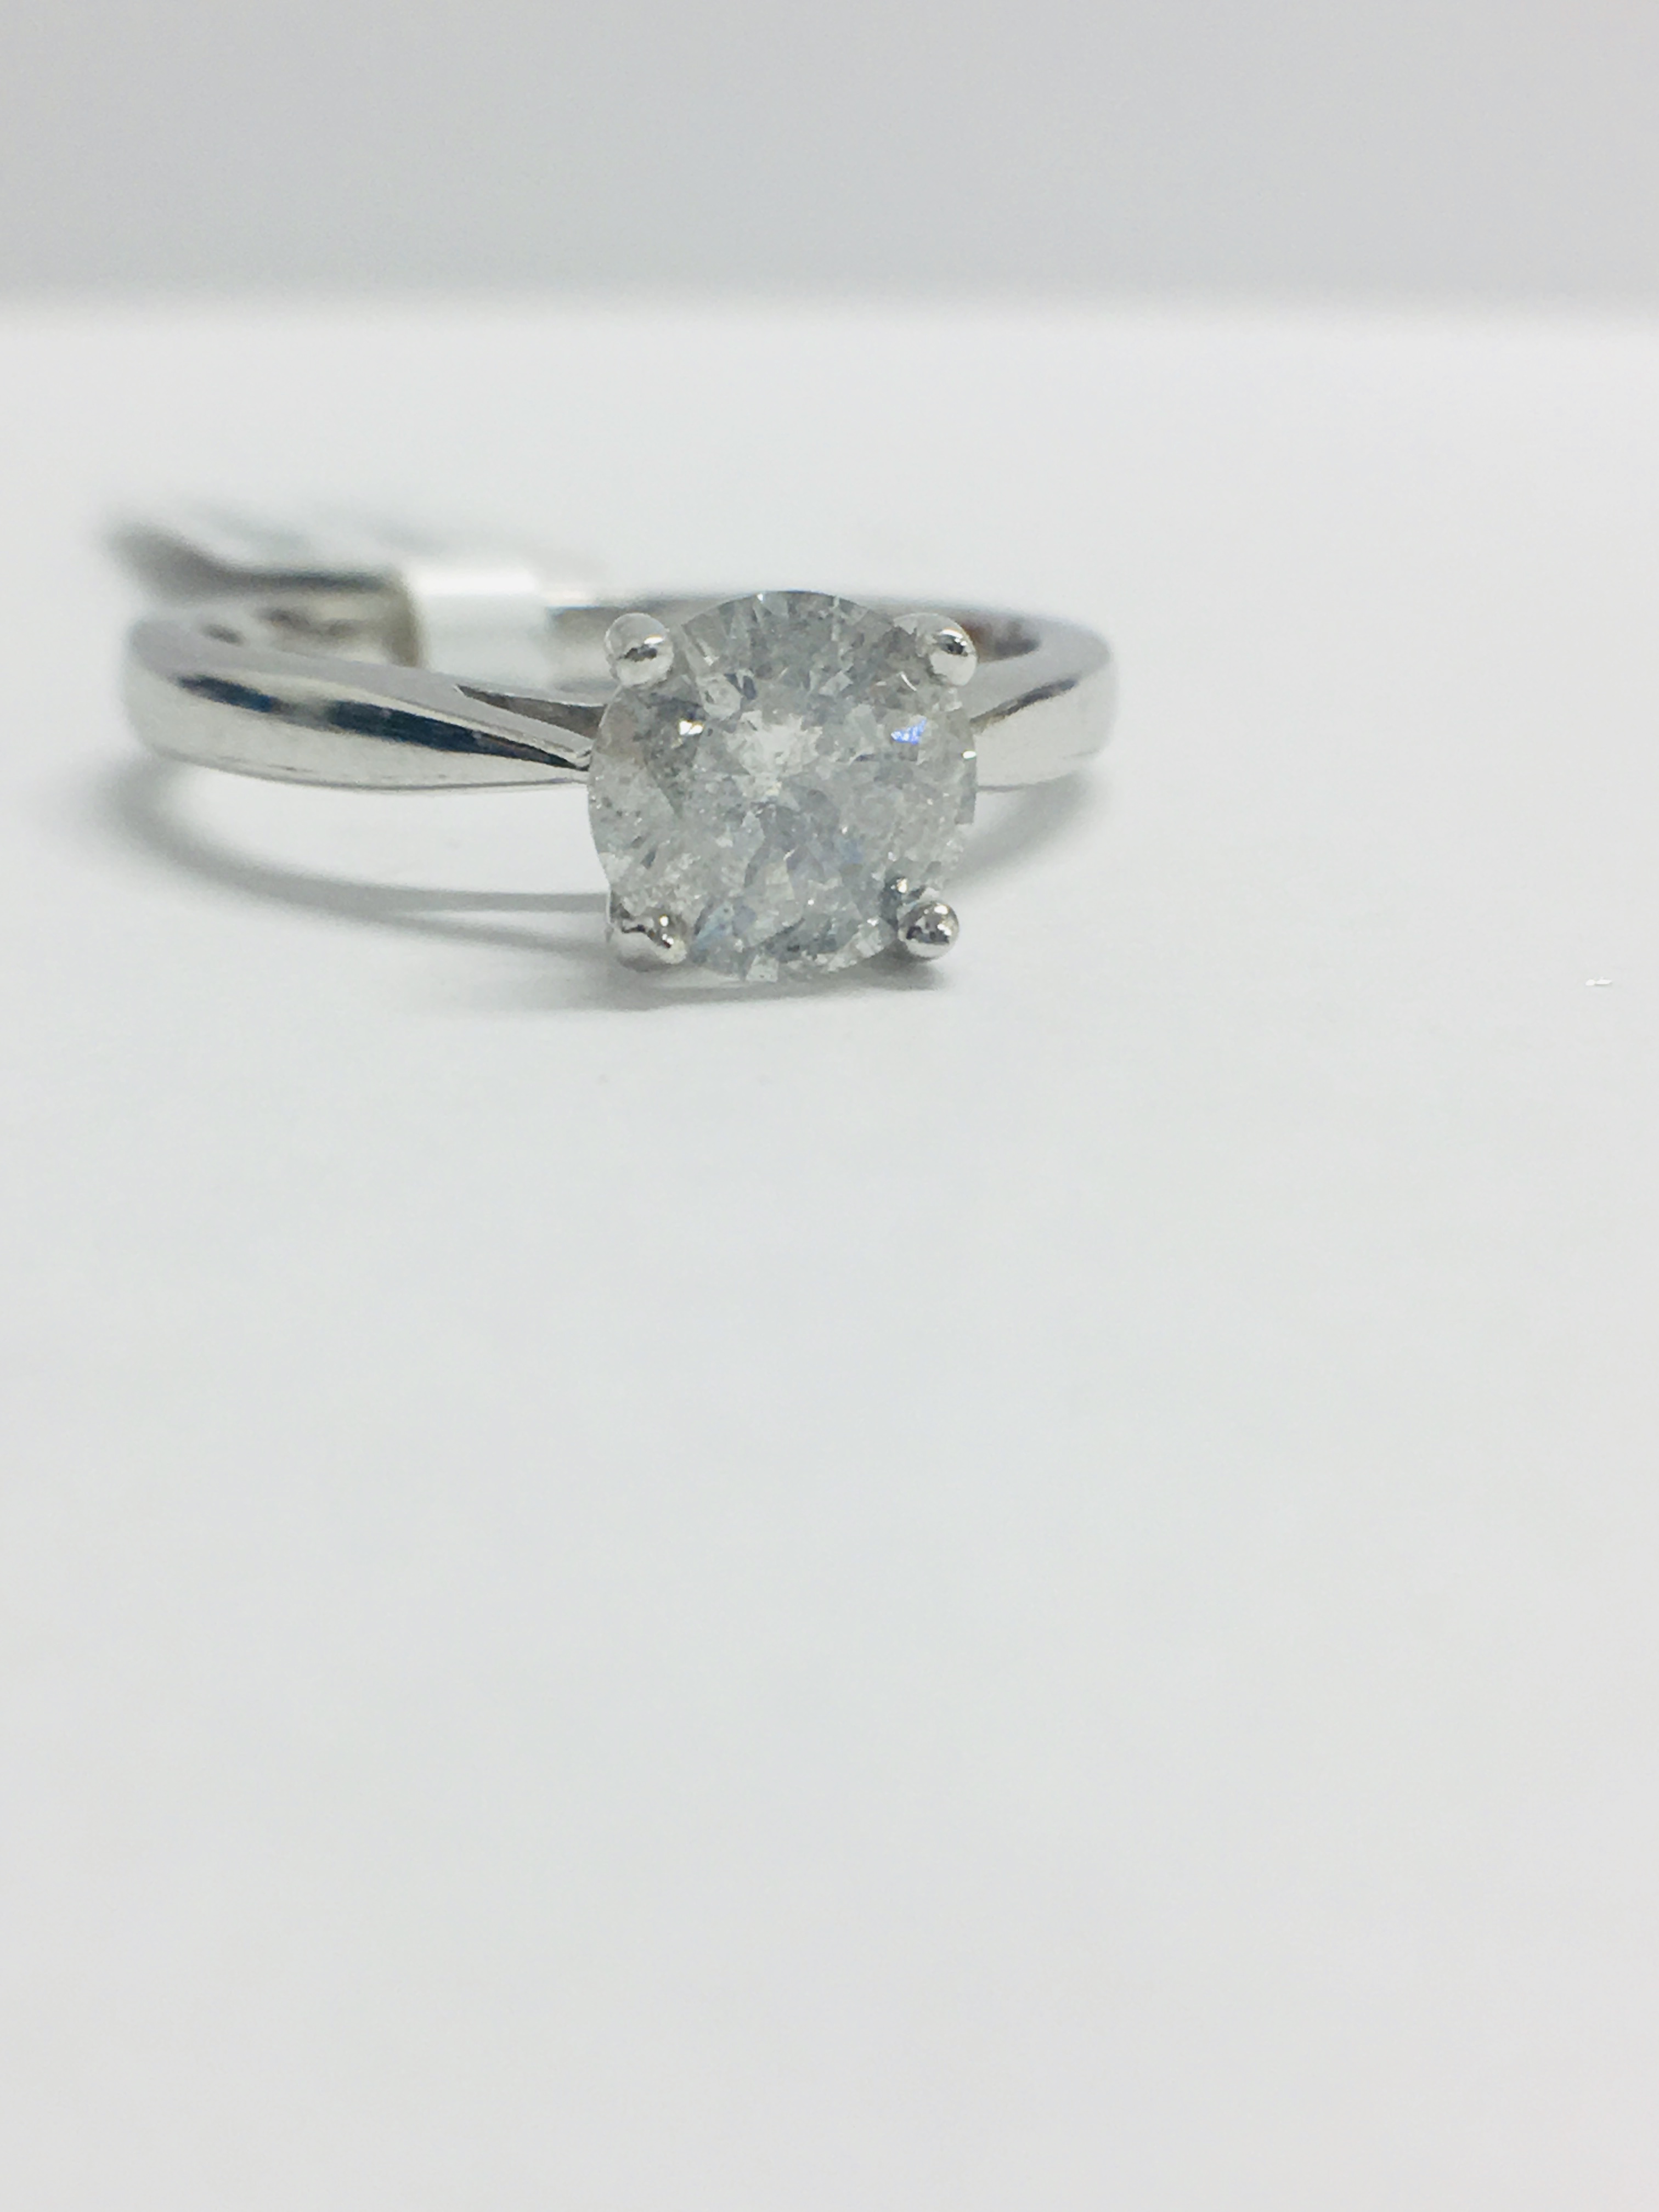 Platinum Solitaire 4 Claw Diamond Ring, - Image 5 of 6